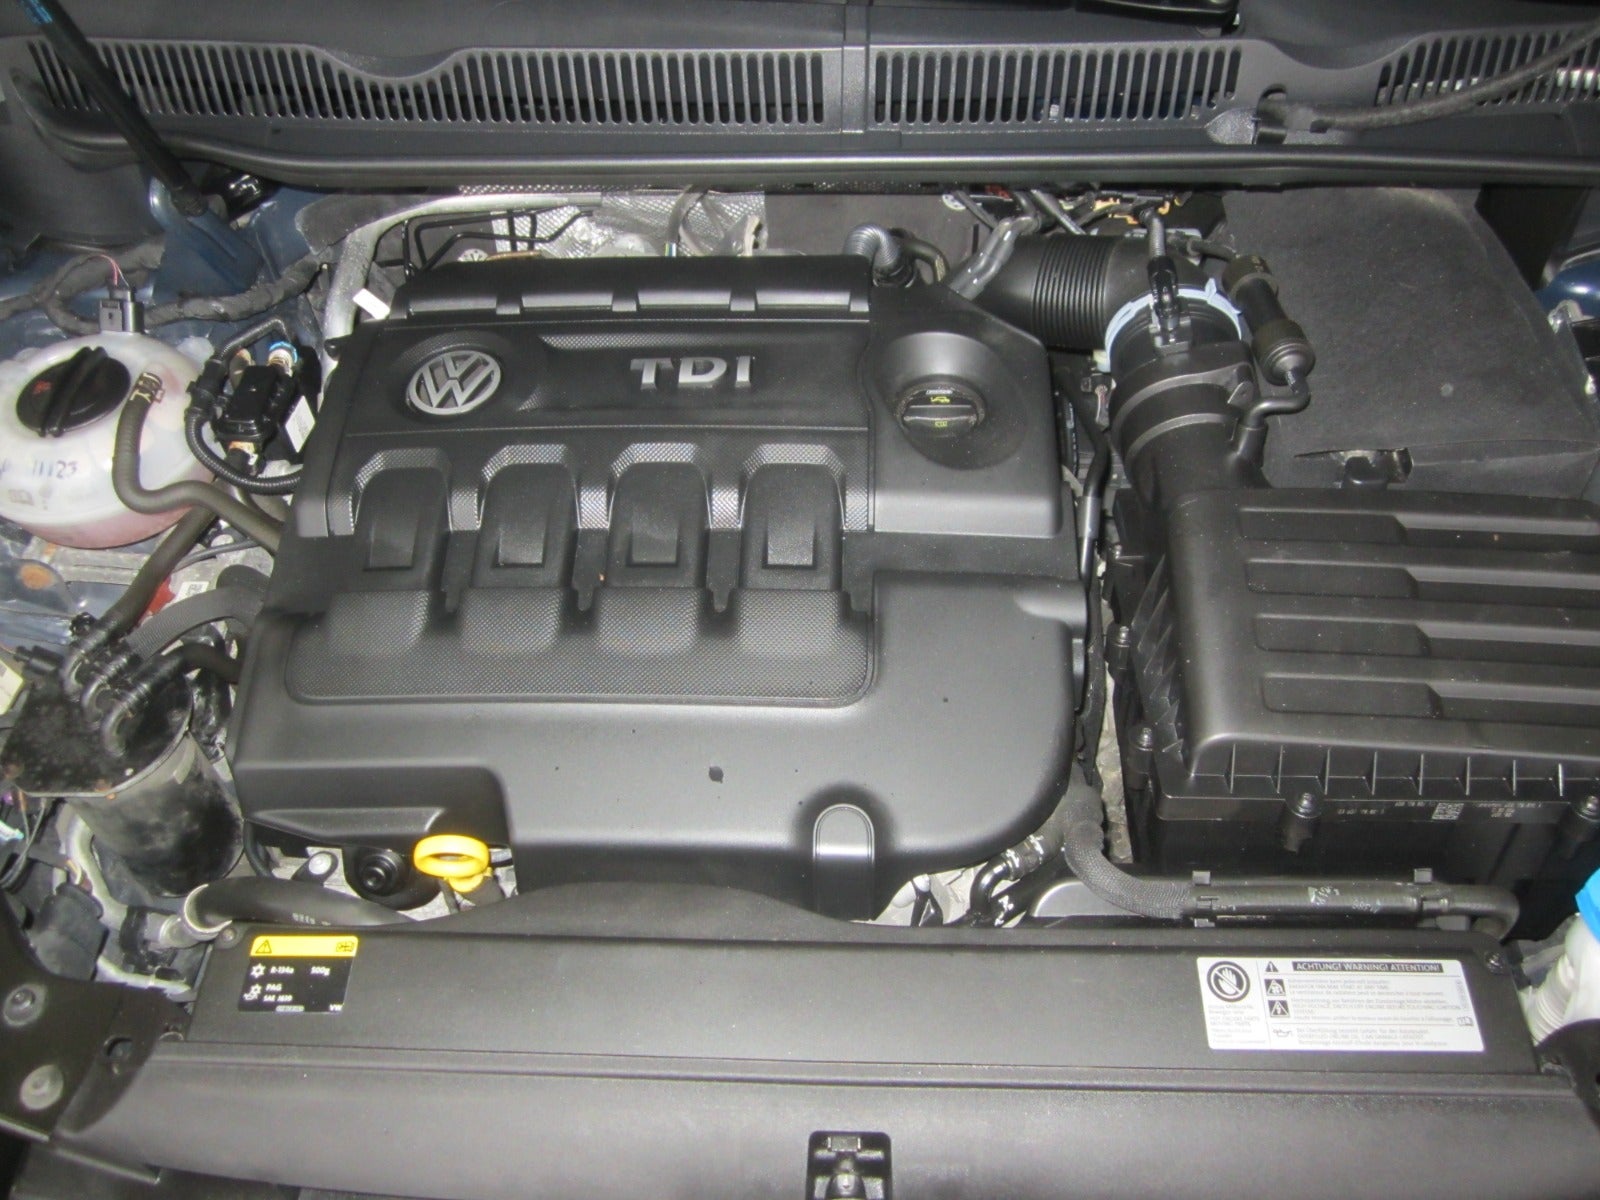 VW Touran TDi 150 Comfortline 7prs